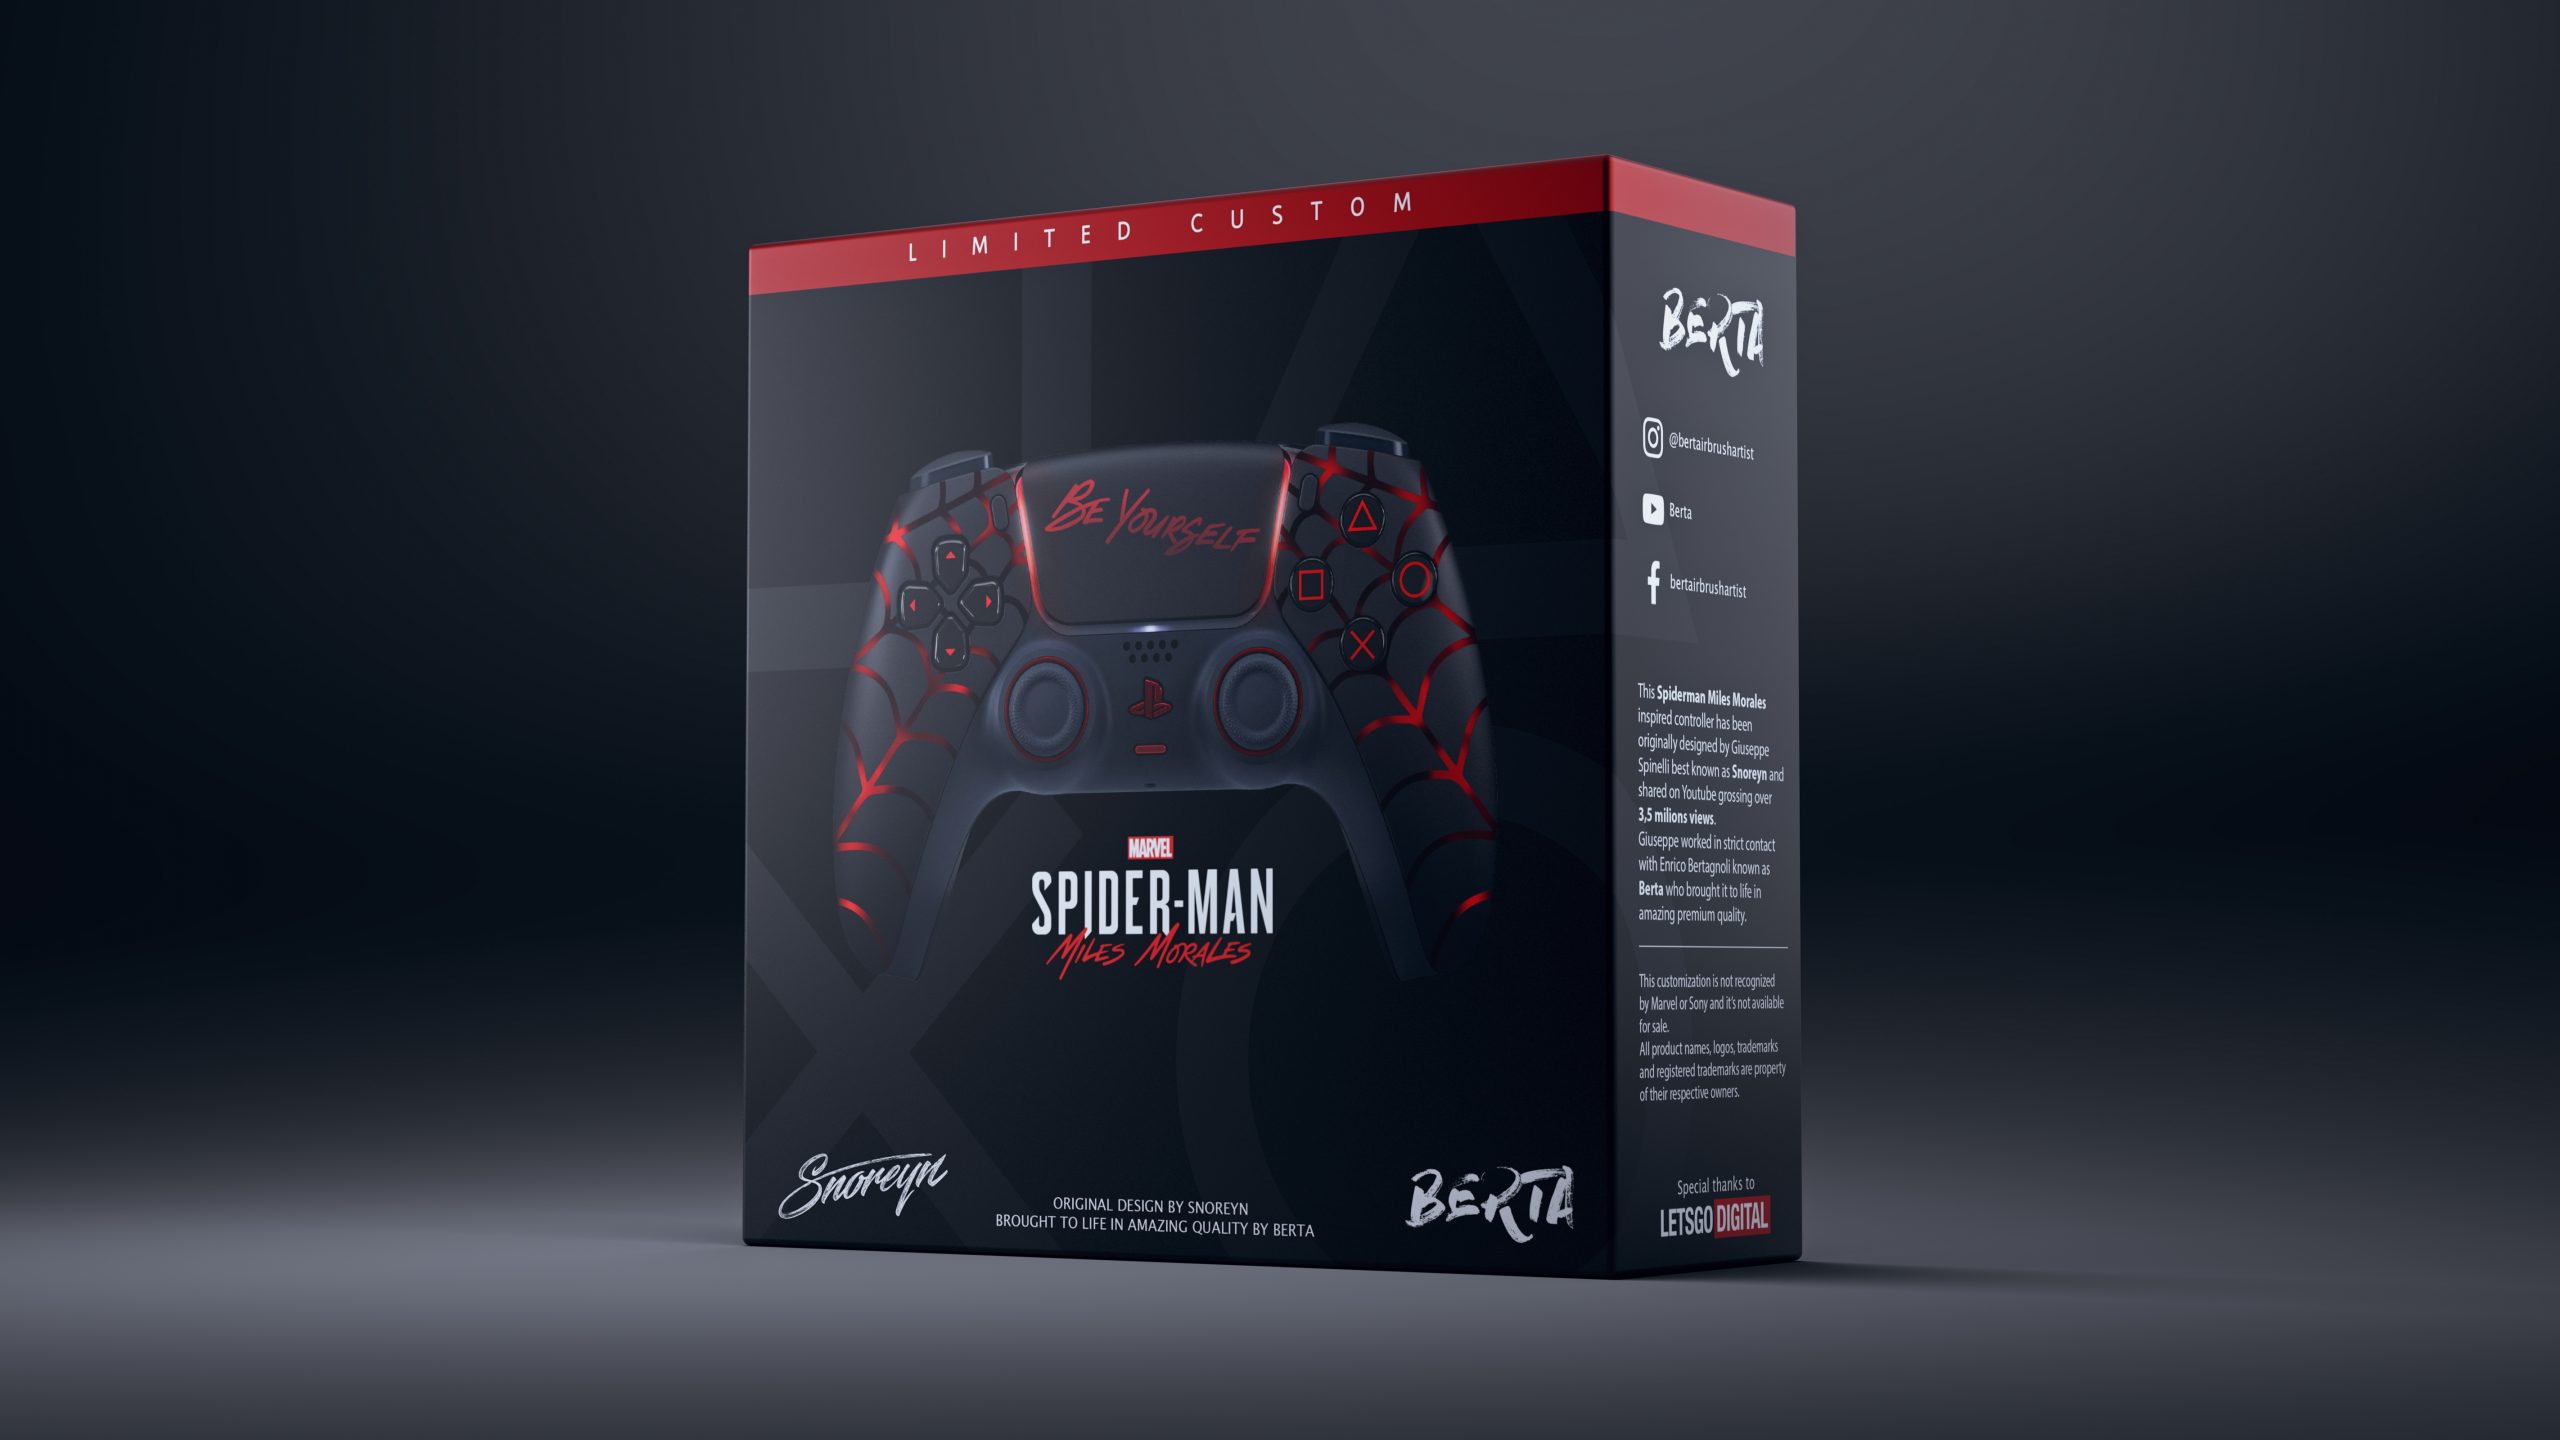 Mando Playstation 5 Dualsense + Spiderman Miles Morales ps5 SONY